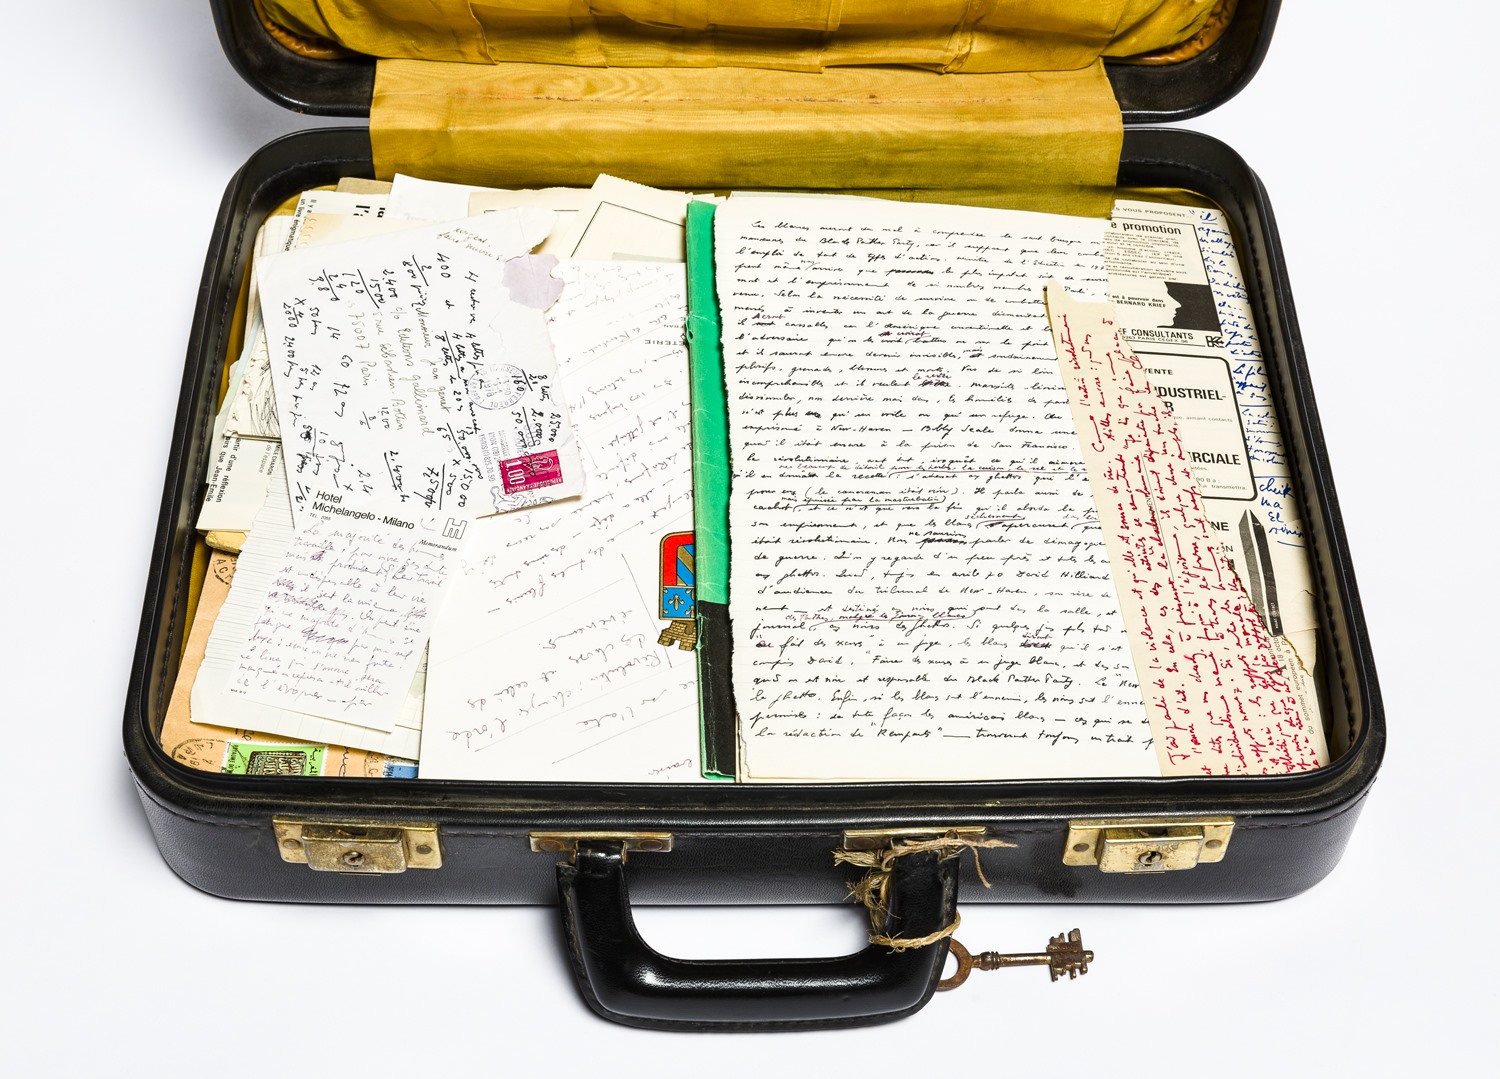 Exhibition - Jean Genet’s suitcases